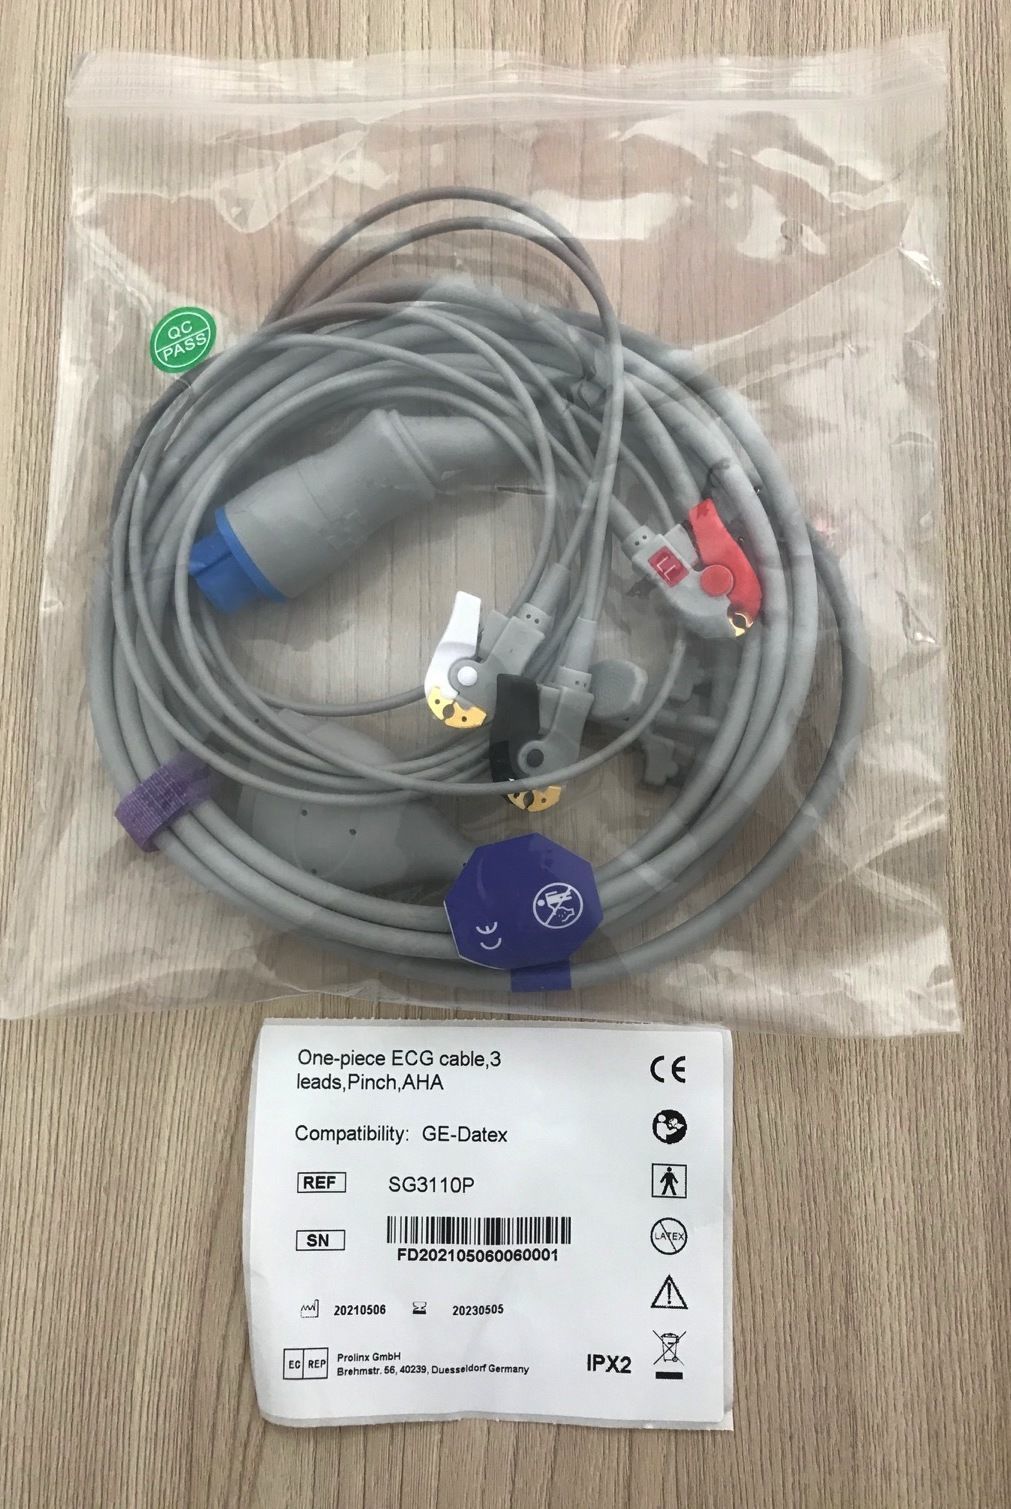 ECG 3 lead wire clip AHA cable for GE Ohmeda Cardiocap5_สายอีซีจีเคเบิ้ลเครื่องวัดสัญญาณชีพข้างเตียงผู้ป่วย GE Ohmeda รุ่น Cardiocap5